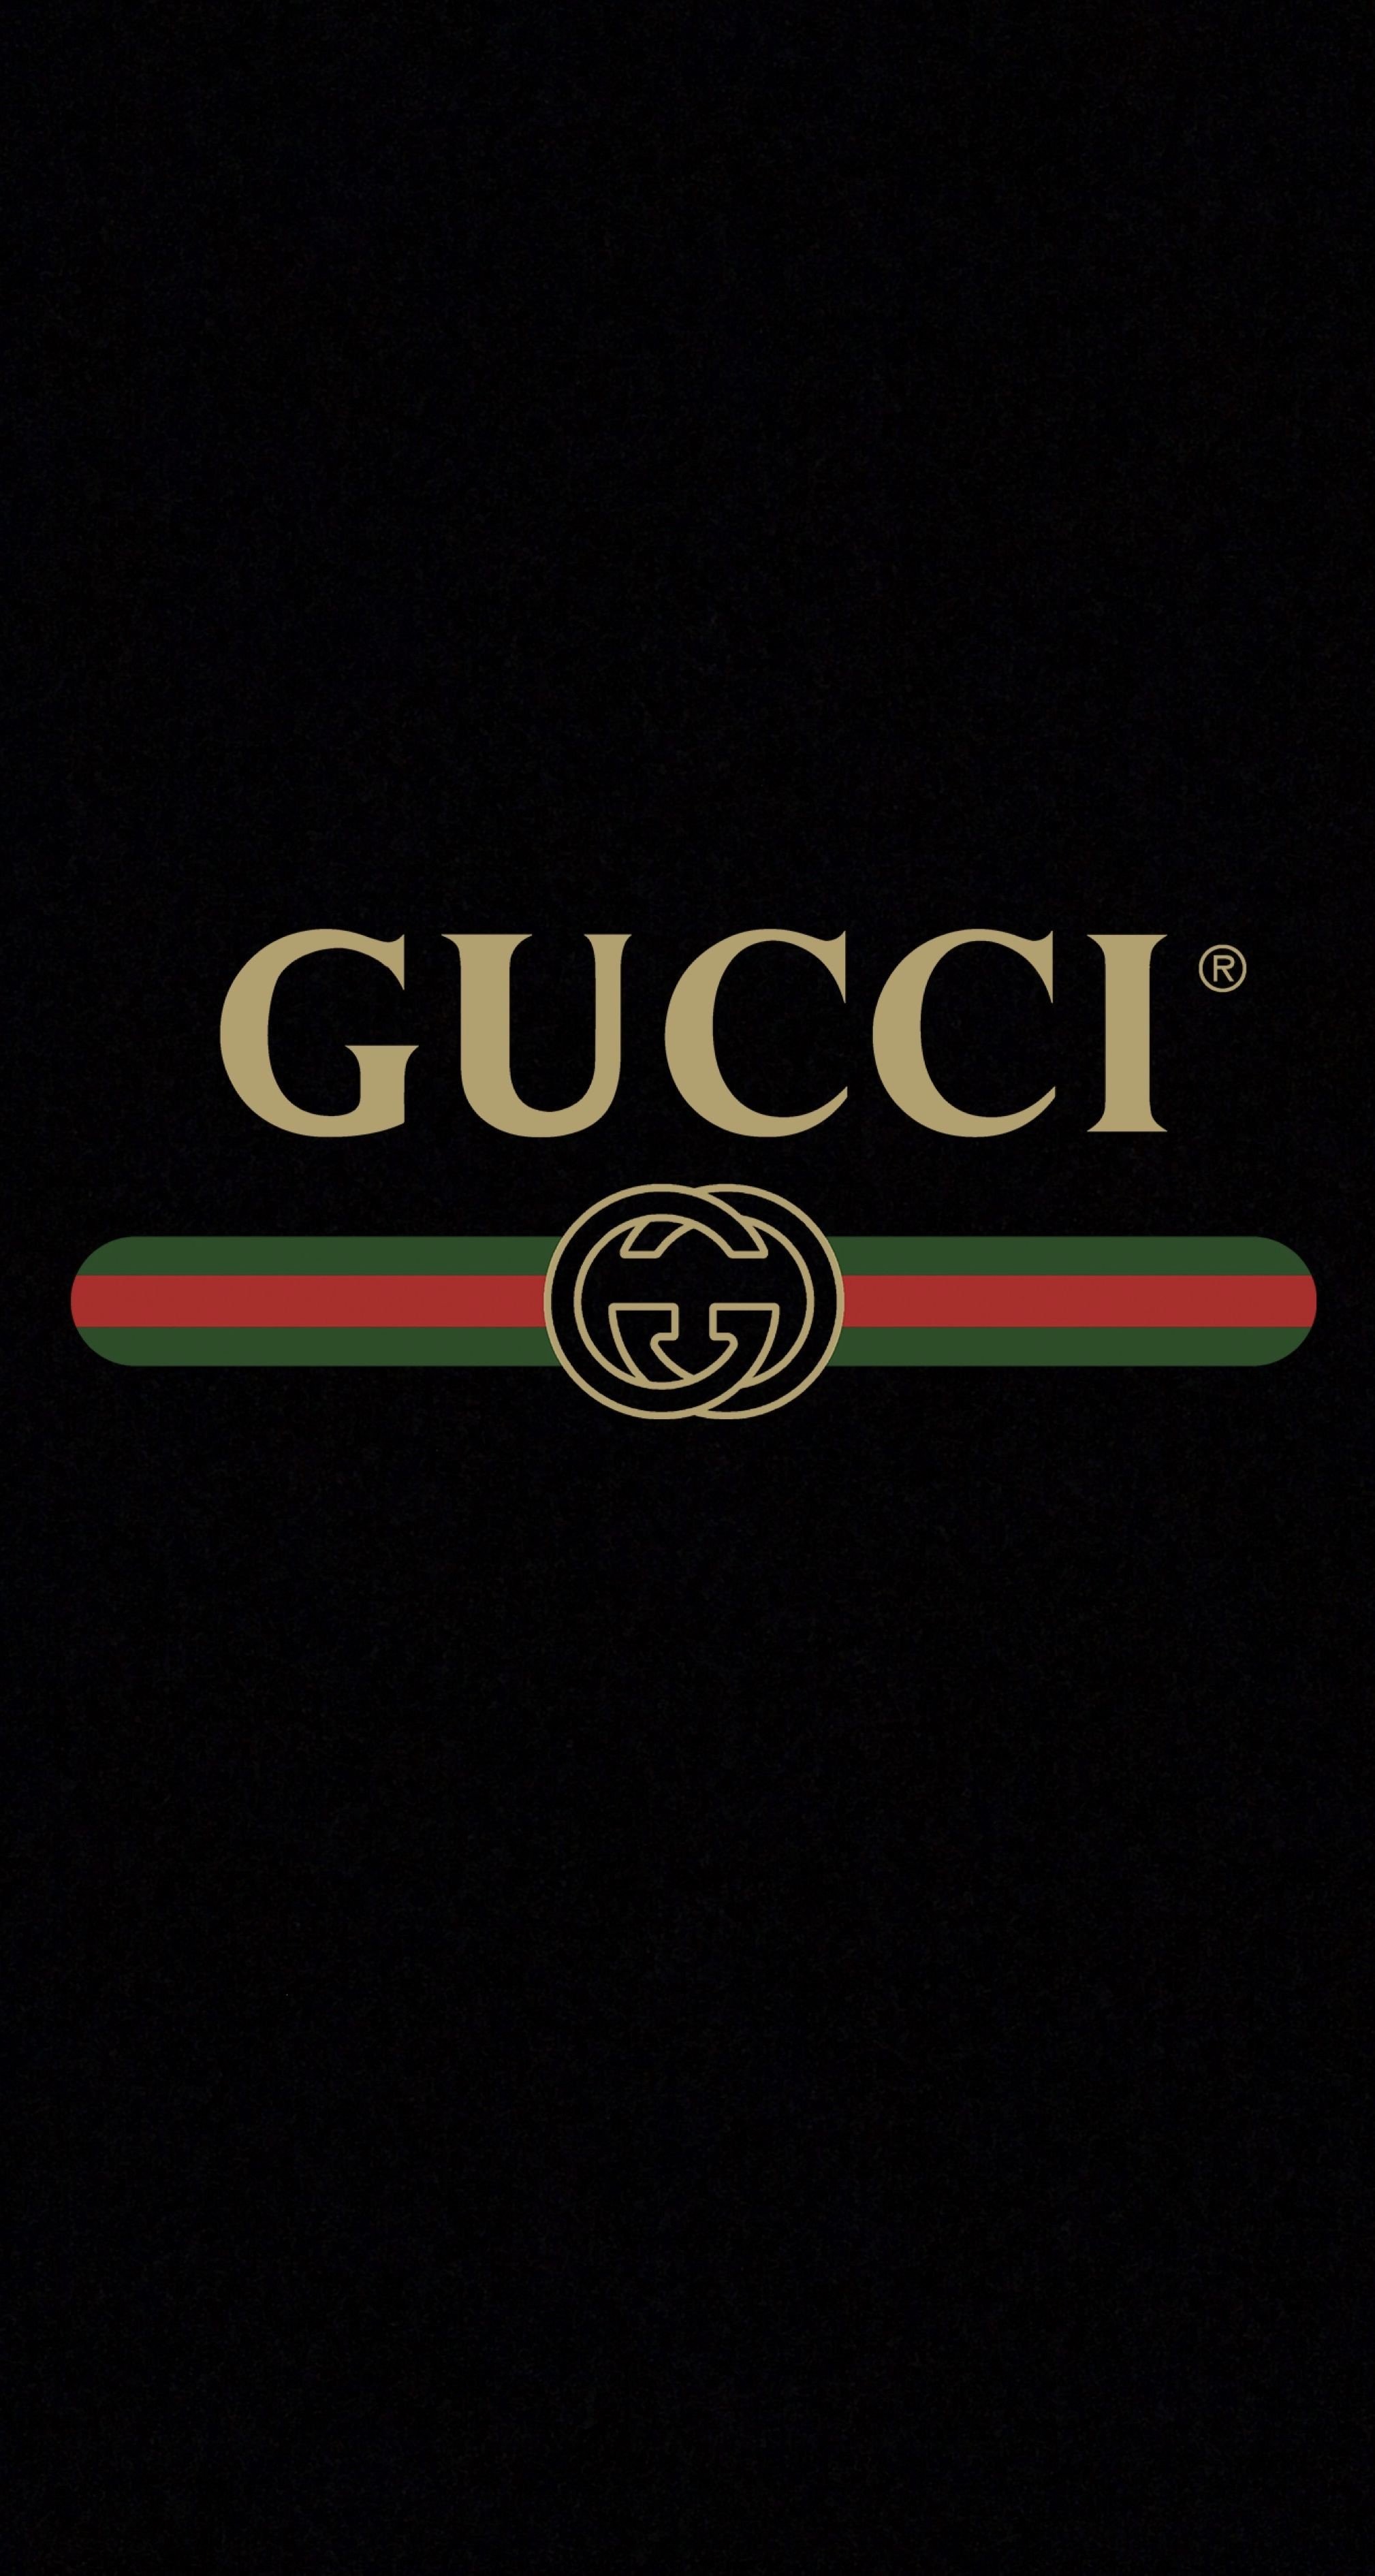 49+] Gucci Wallpapers on WallpaperSafari